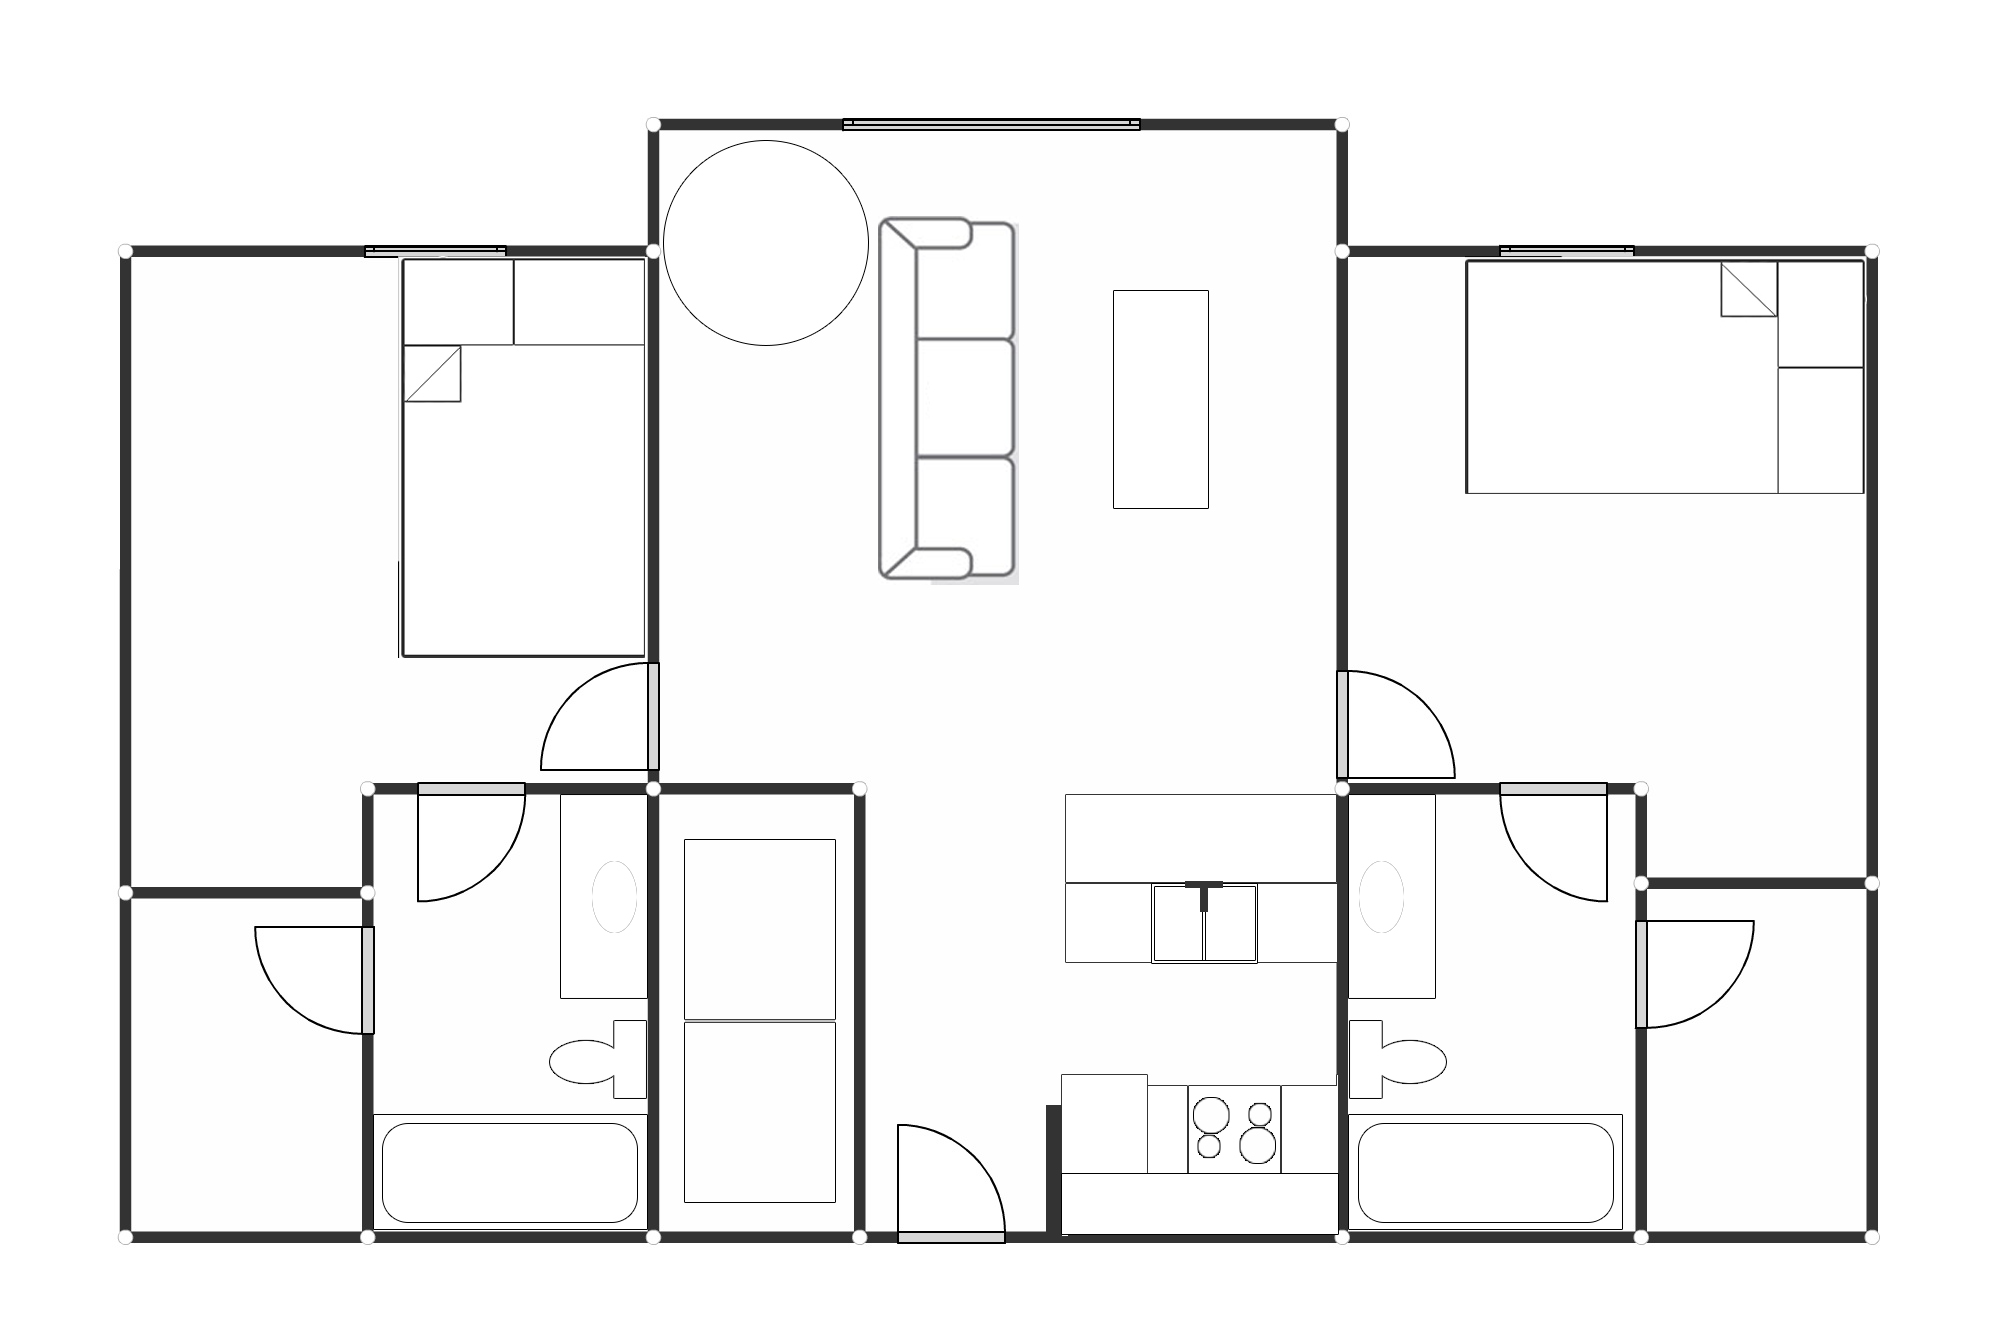 Sundance Court two bedroom, two bathroom blueprint layout.